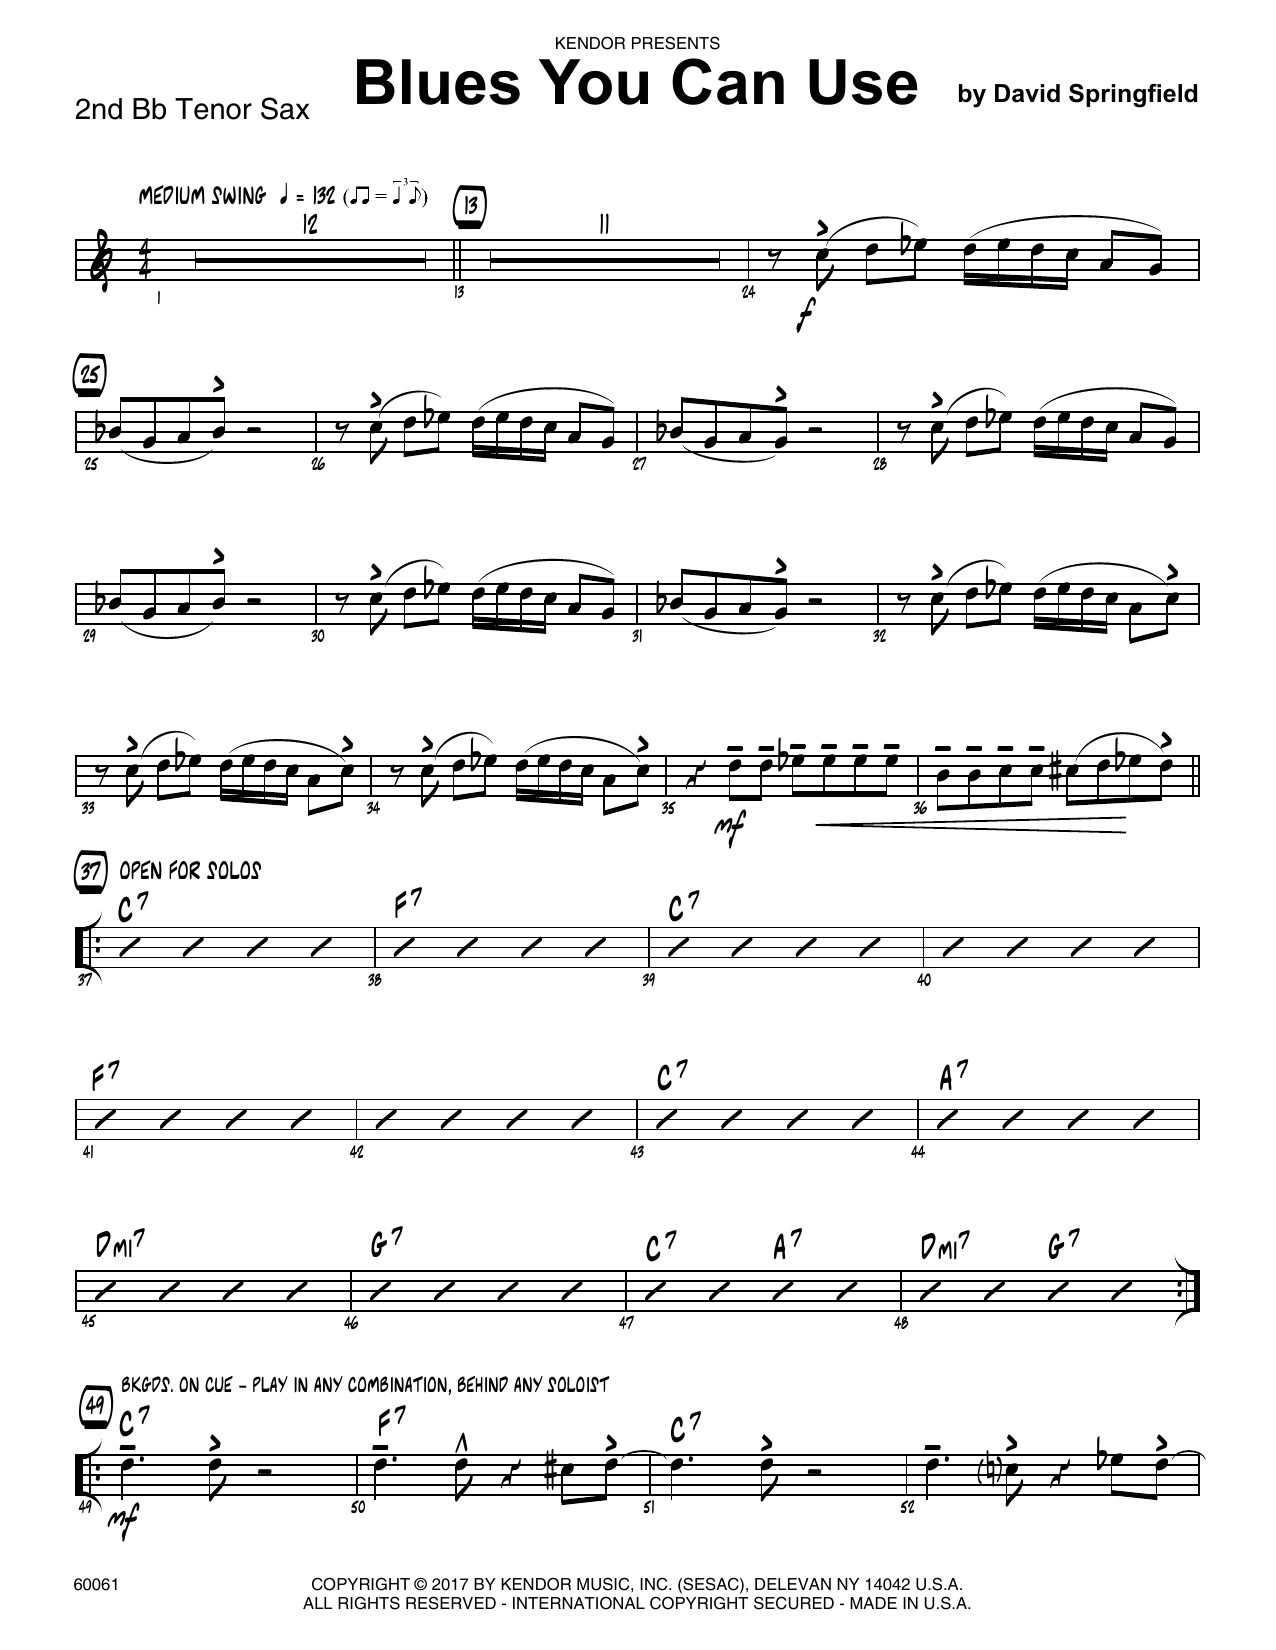 Download David Springfield Blues You Can Use - 2nd Bb Tenor Saxoph Sheet Music